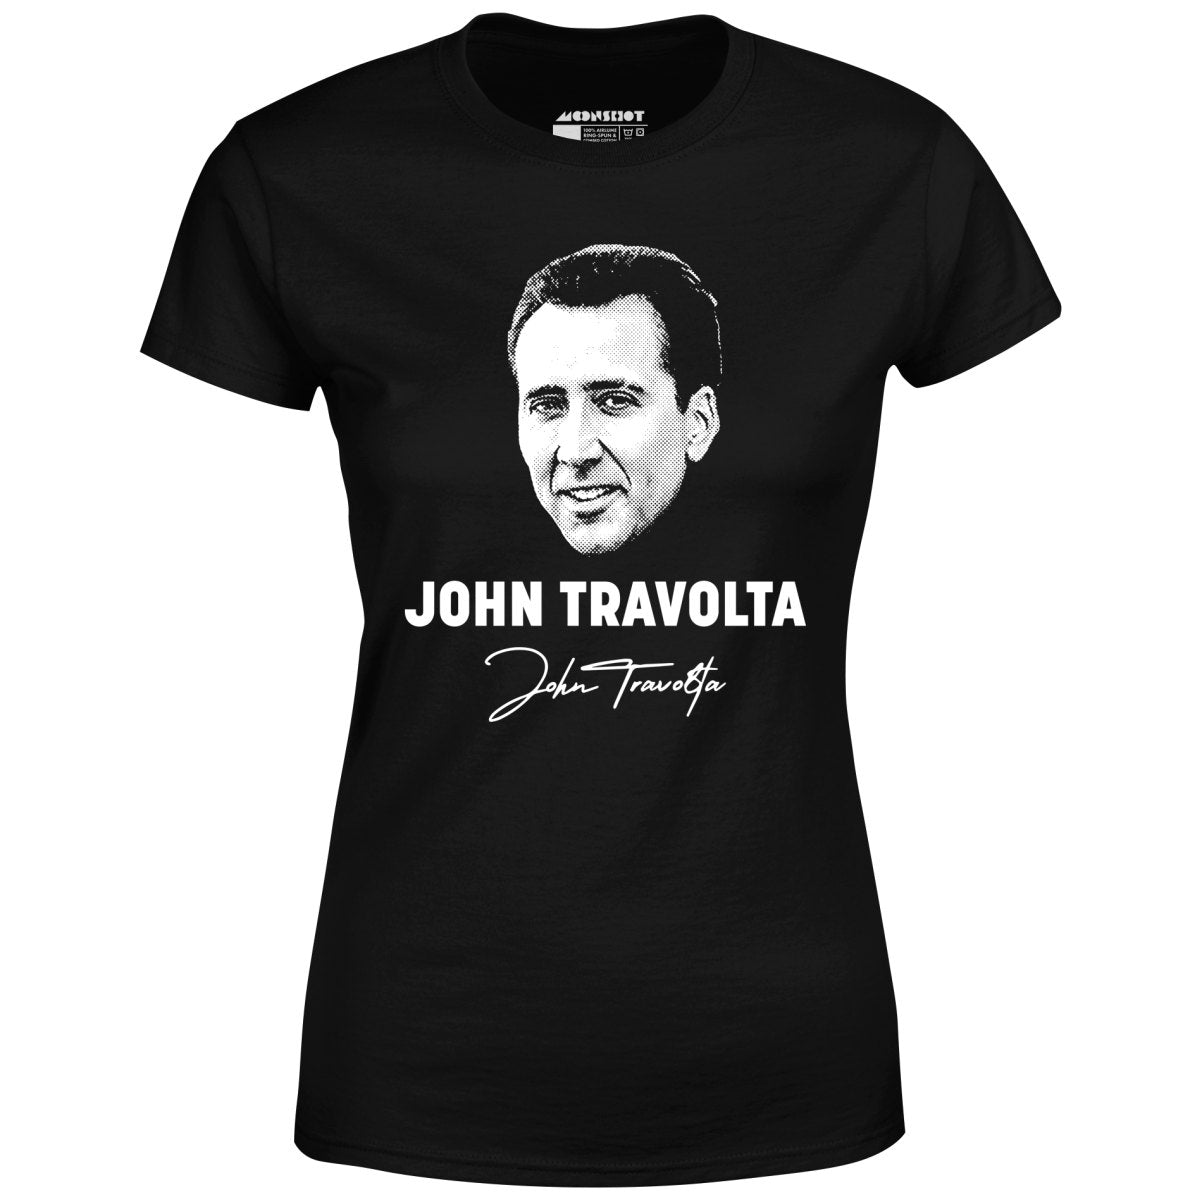 John Travolta - Nicolas Cage Face Off Mashup - Women's T-Shirt